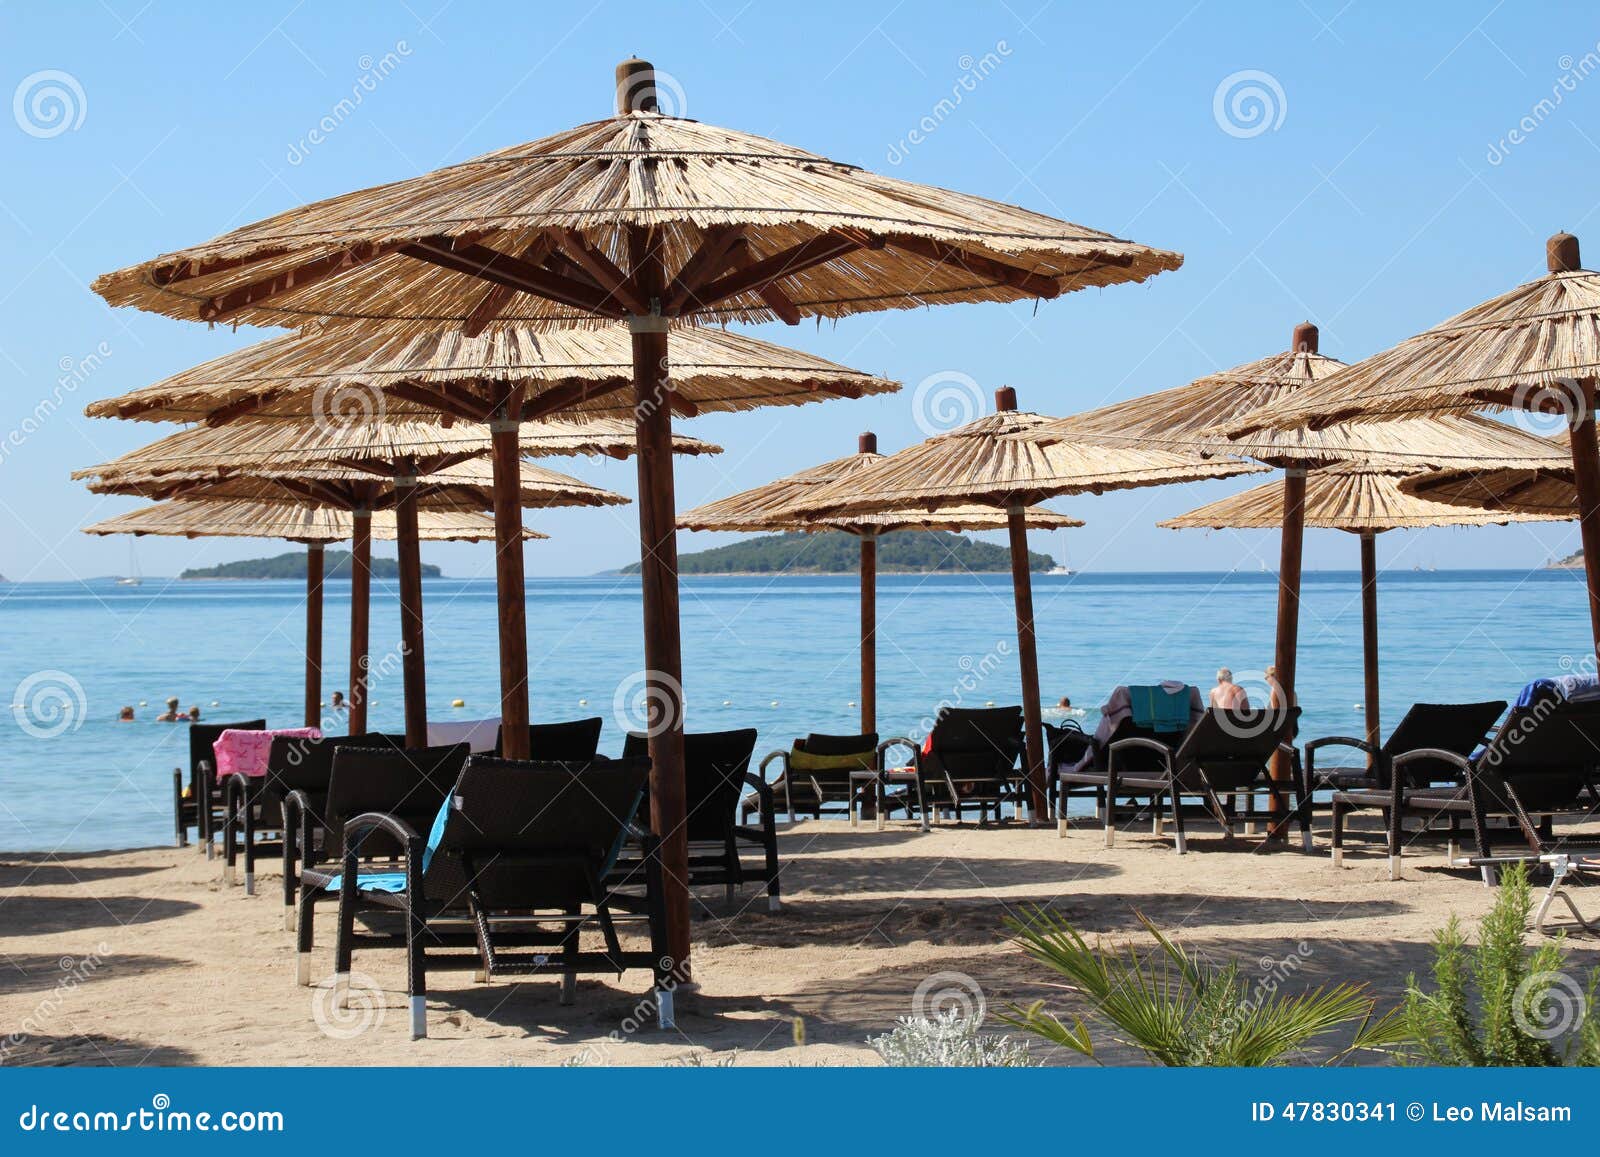 Deckchairs and Beach Umbrellas on a Croatian Beach Stock Image - Image ...